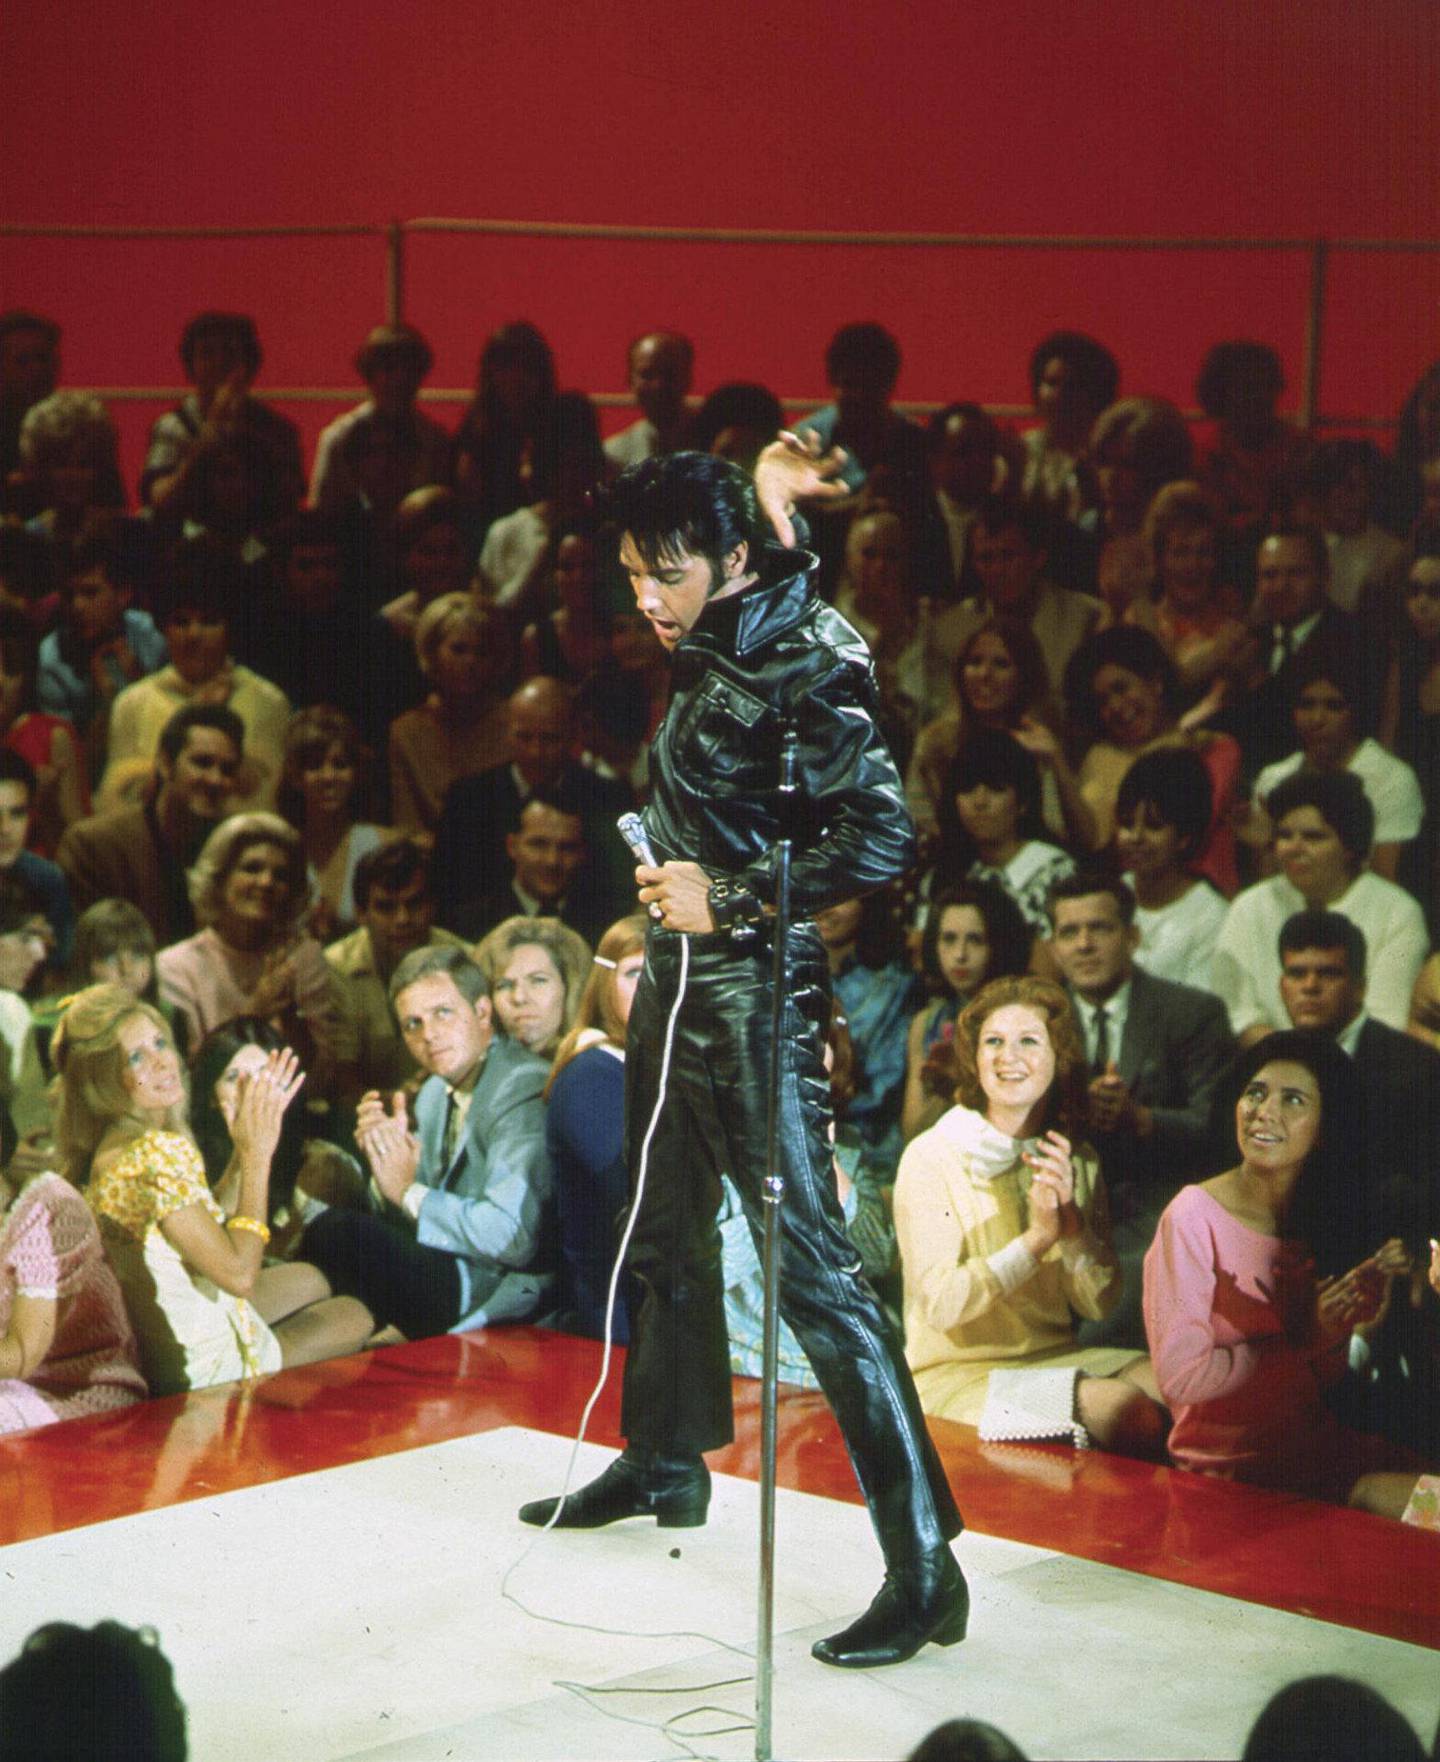 I Amerika hadde mange også fått fargefjernsyn i 1968.
FOTO: RCA/ SONY MUSIC